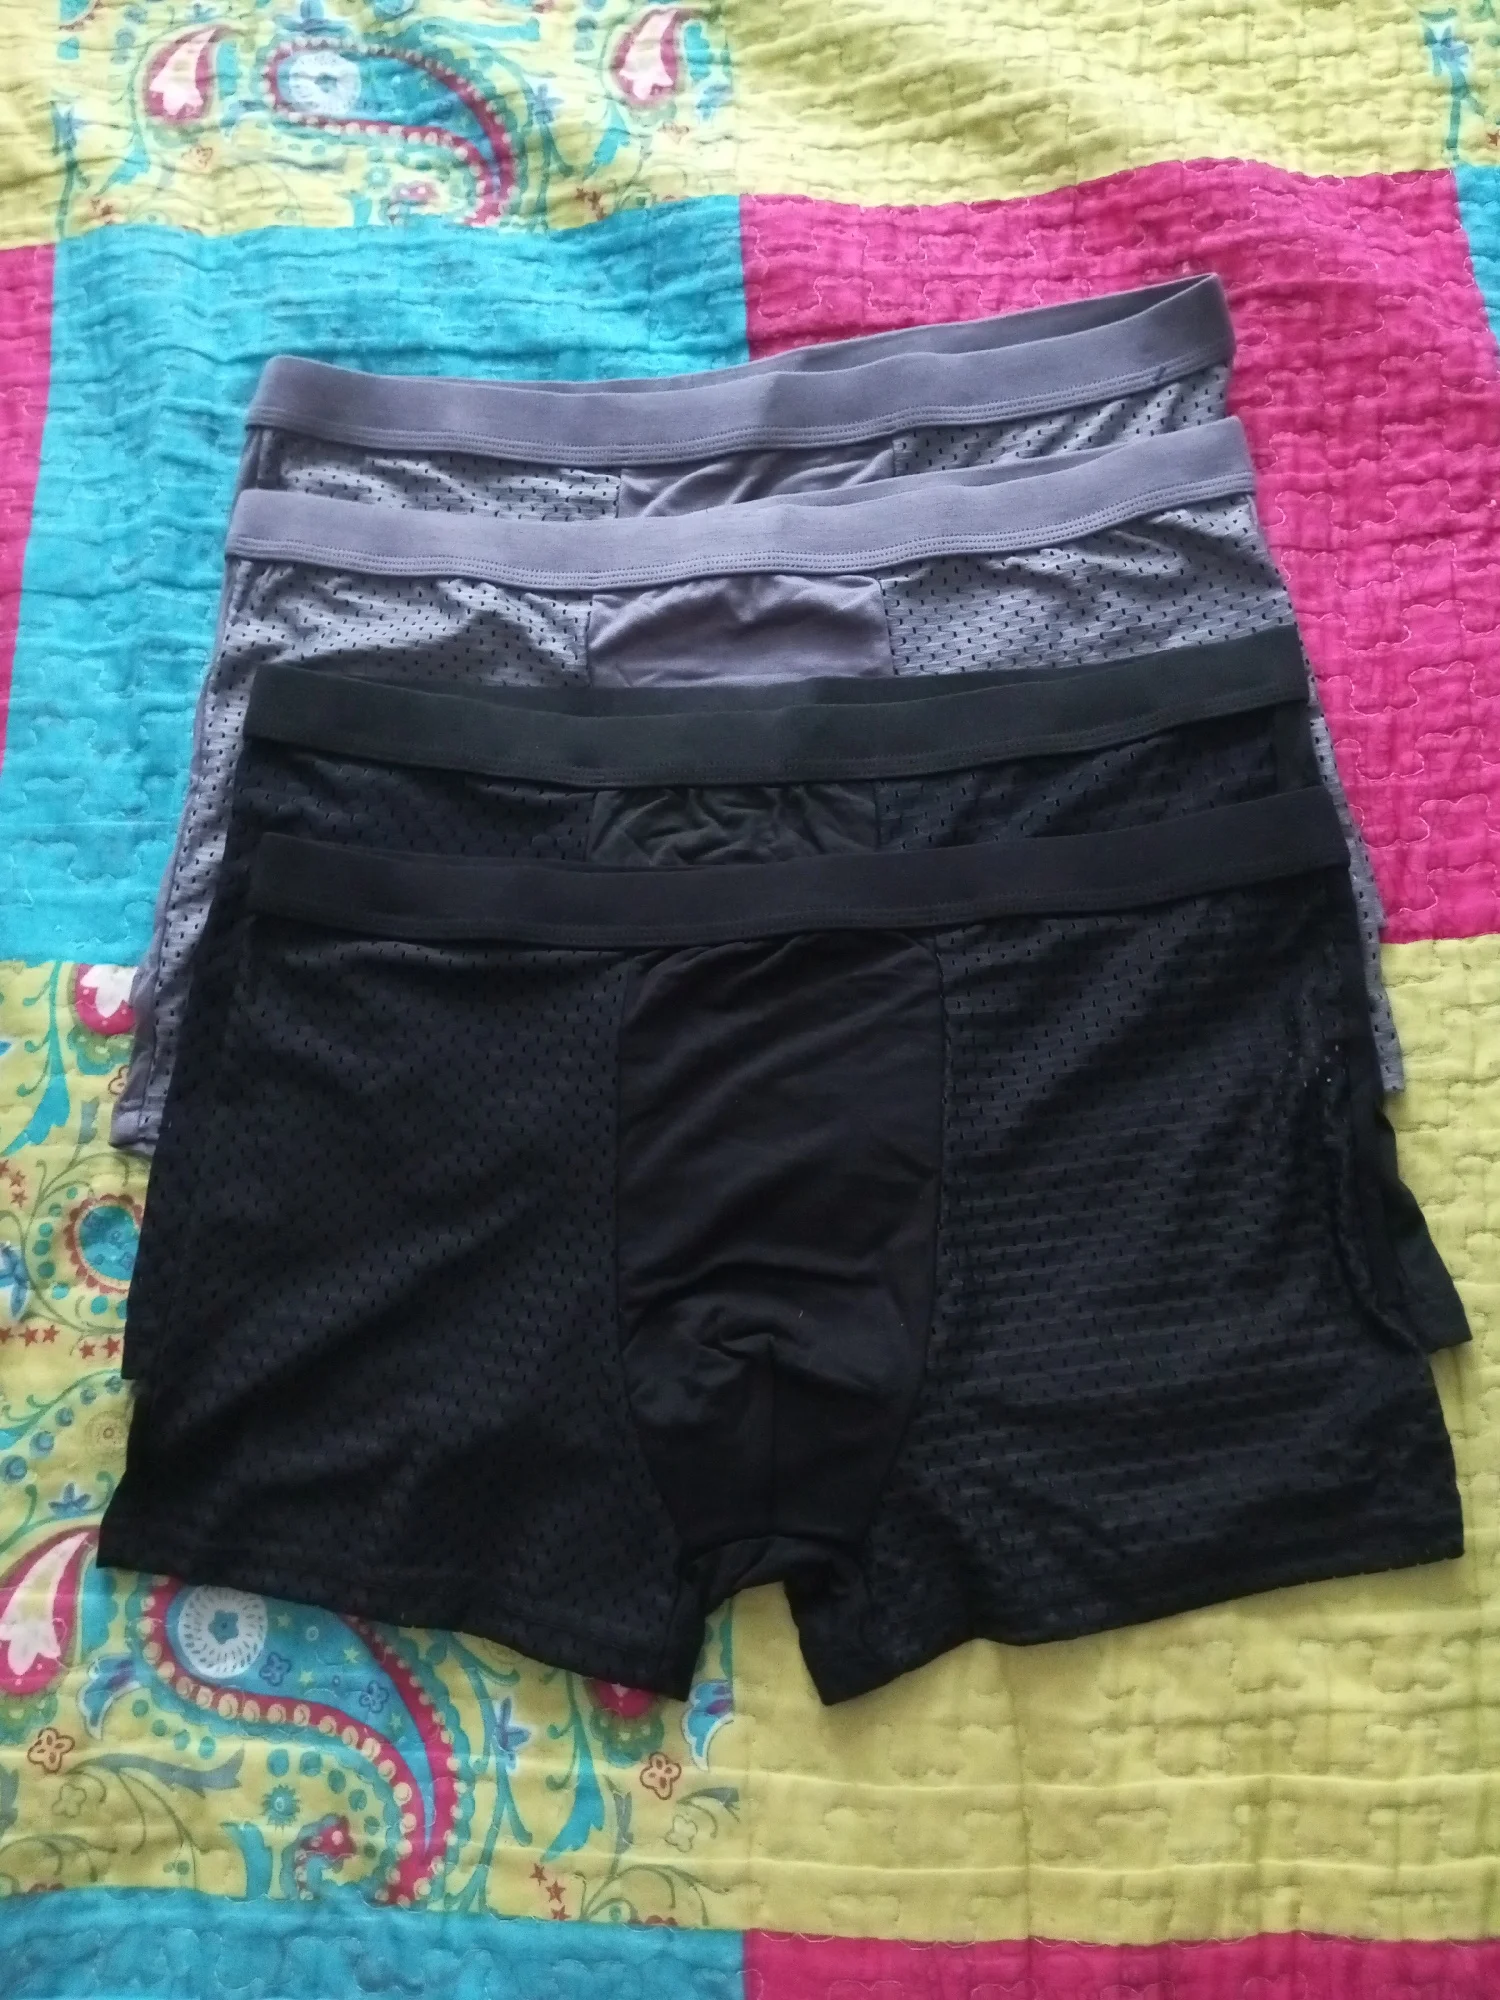 4pcs/Lot Men's Panties Male Underpants Man Pack Shorts Boxers Underwear Slip Homme Calzoncillos Bamboo Hole Large Size 5XL6XL7XL photo review